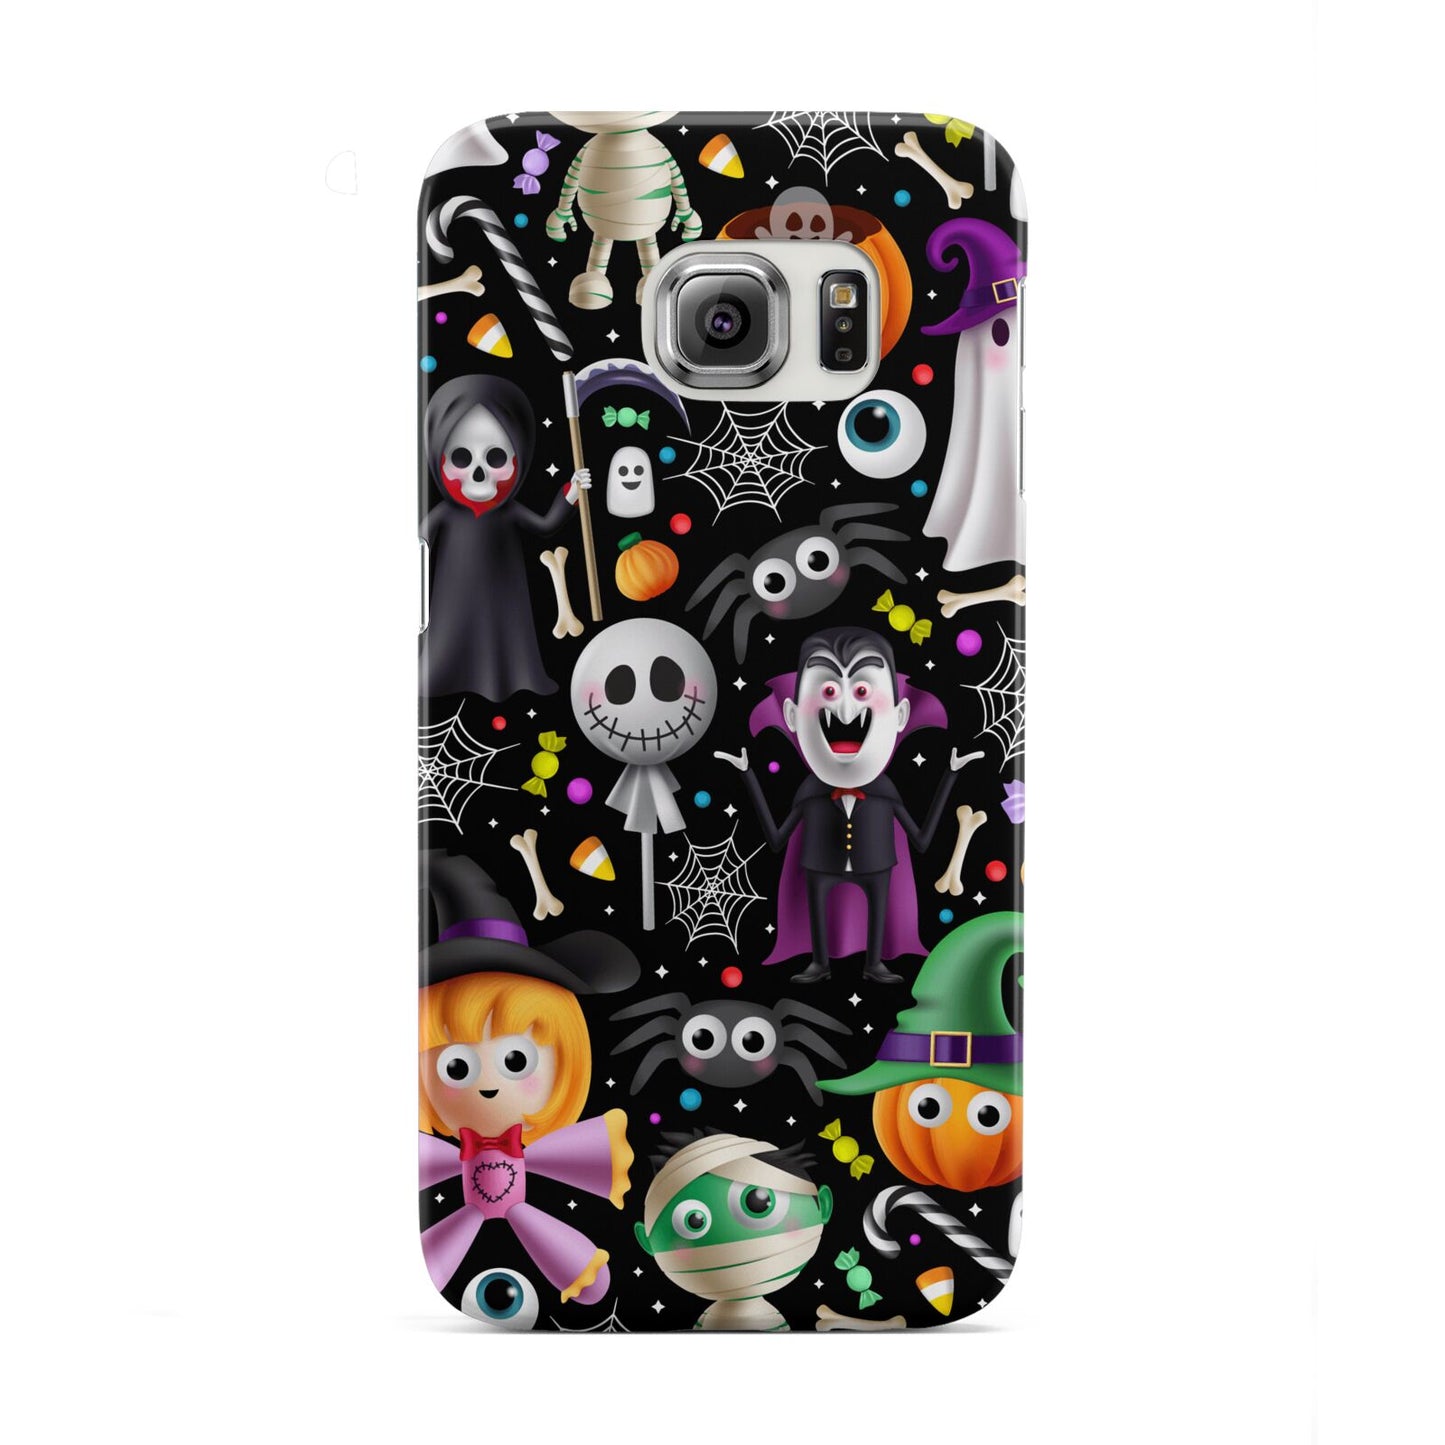 Colourful Halloween Samsung Galaxy S6 Edge Case